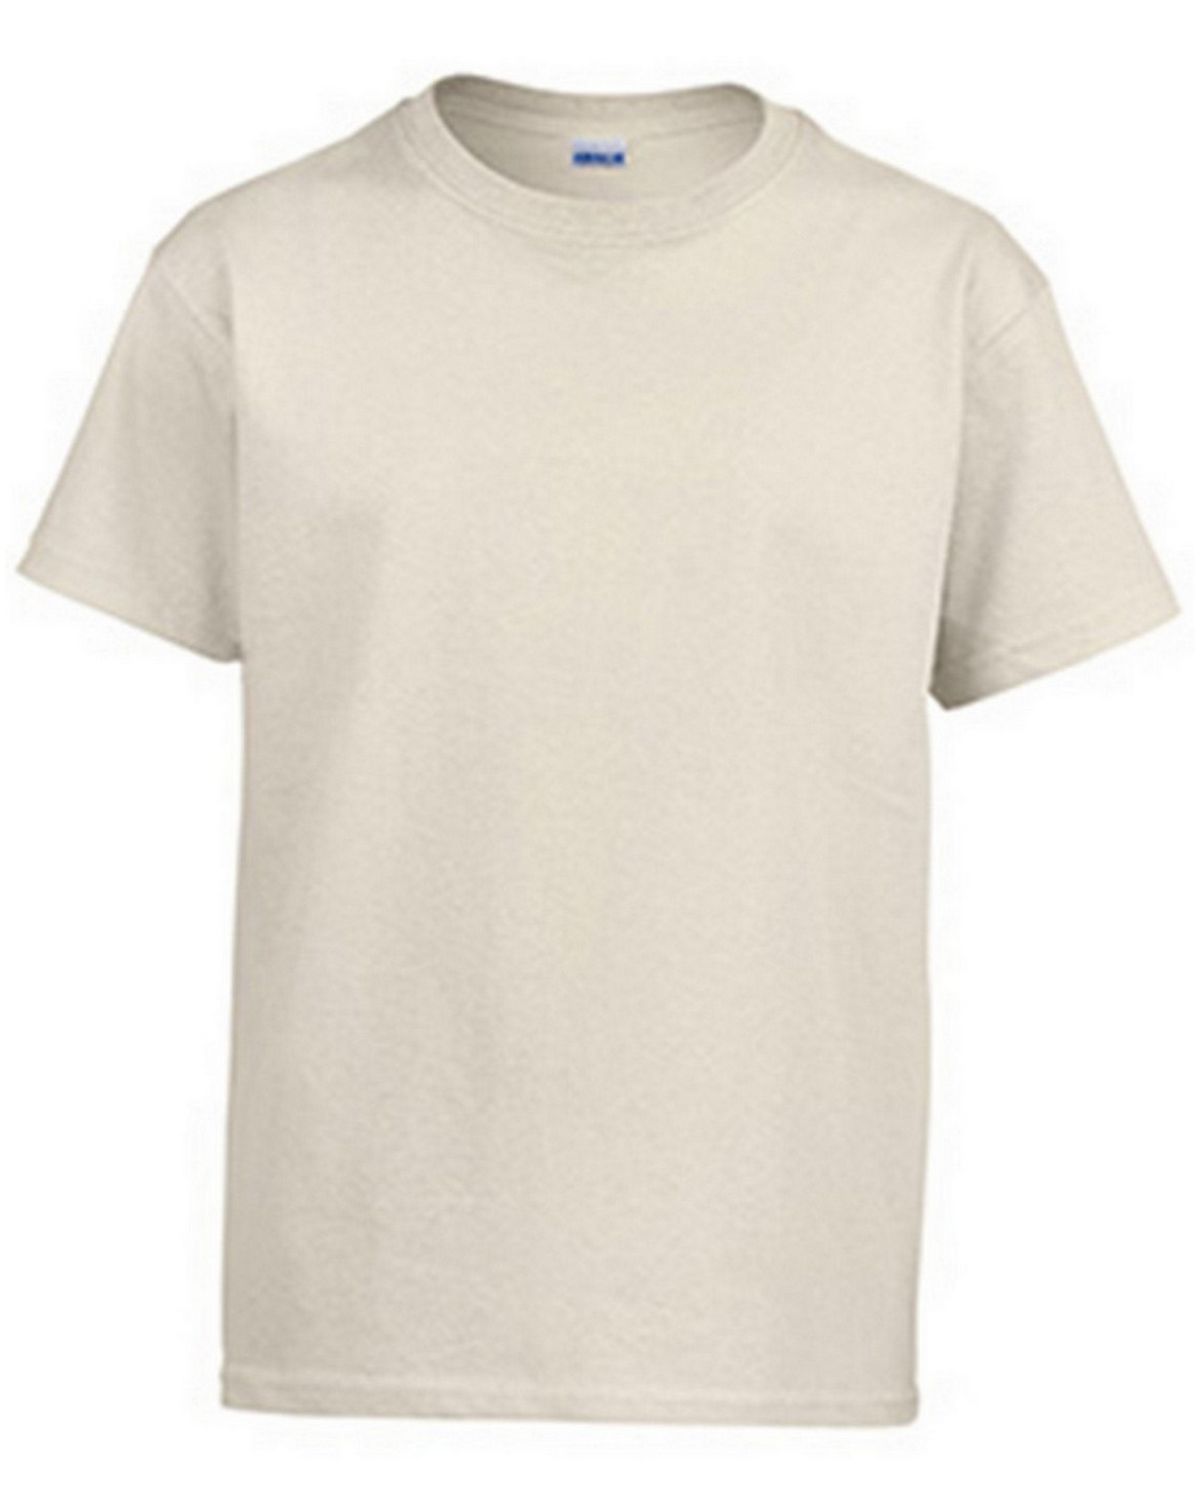 Gildan Cotton T Shirt Size Chart